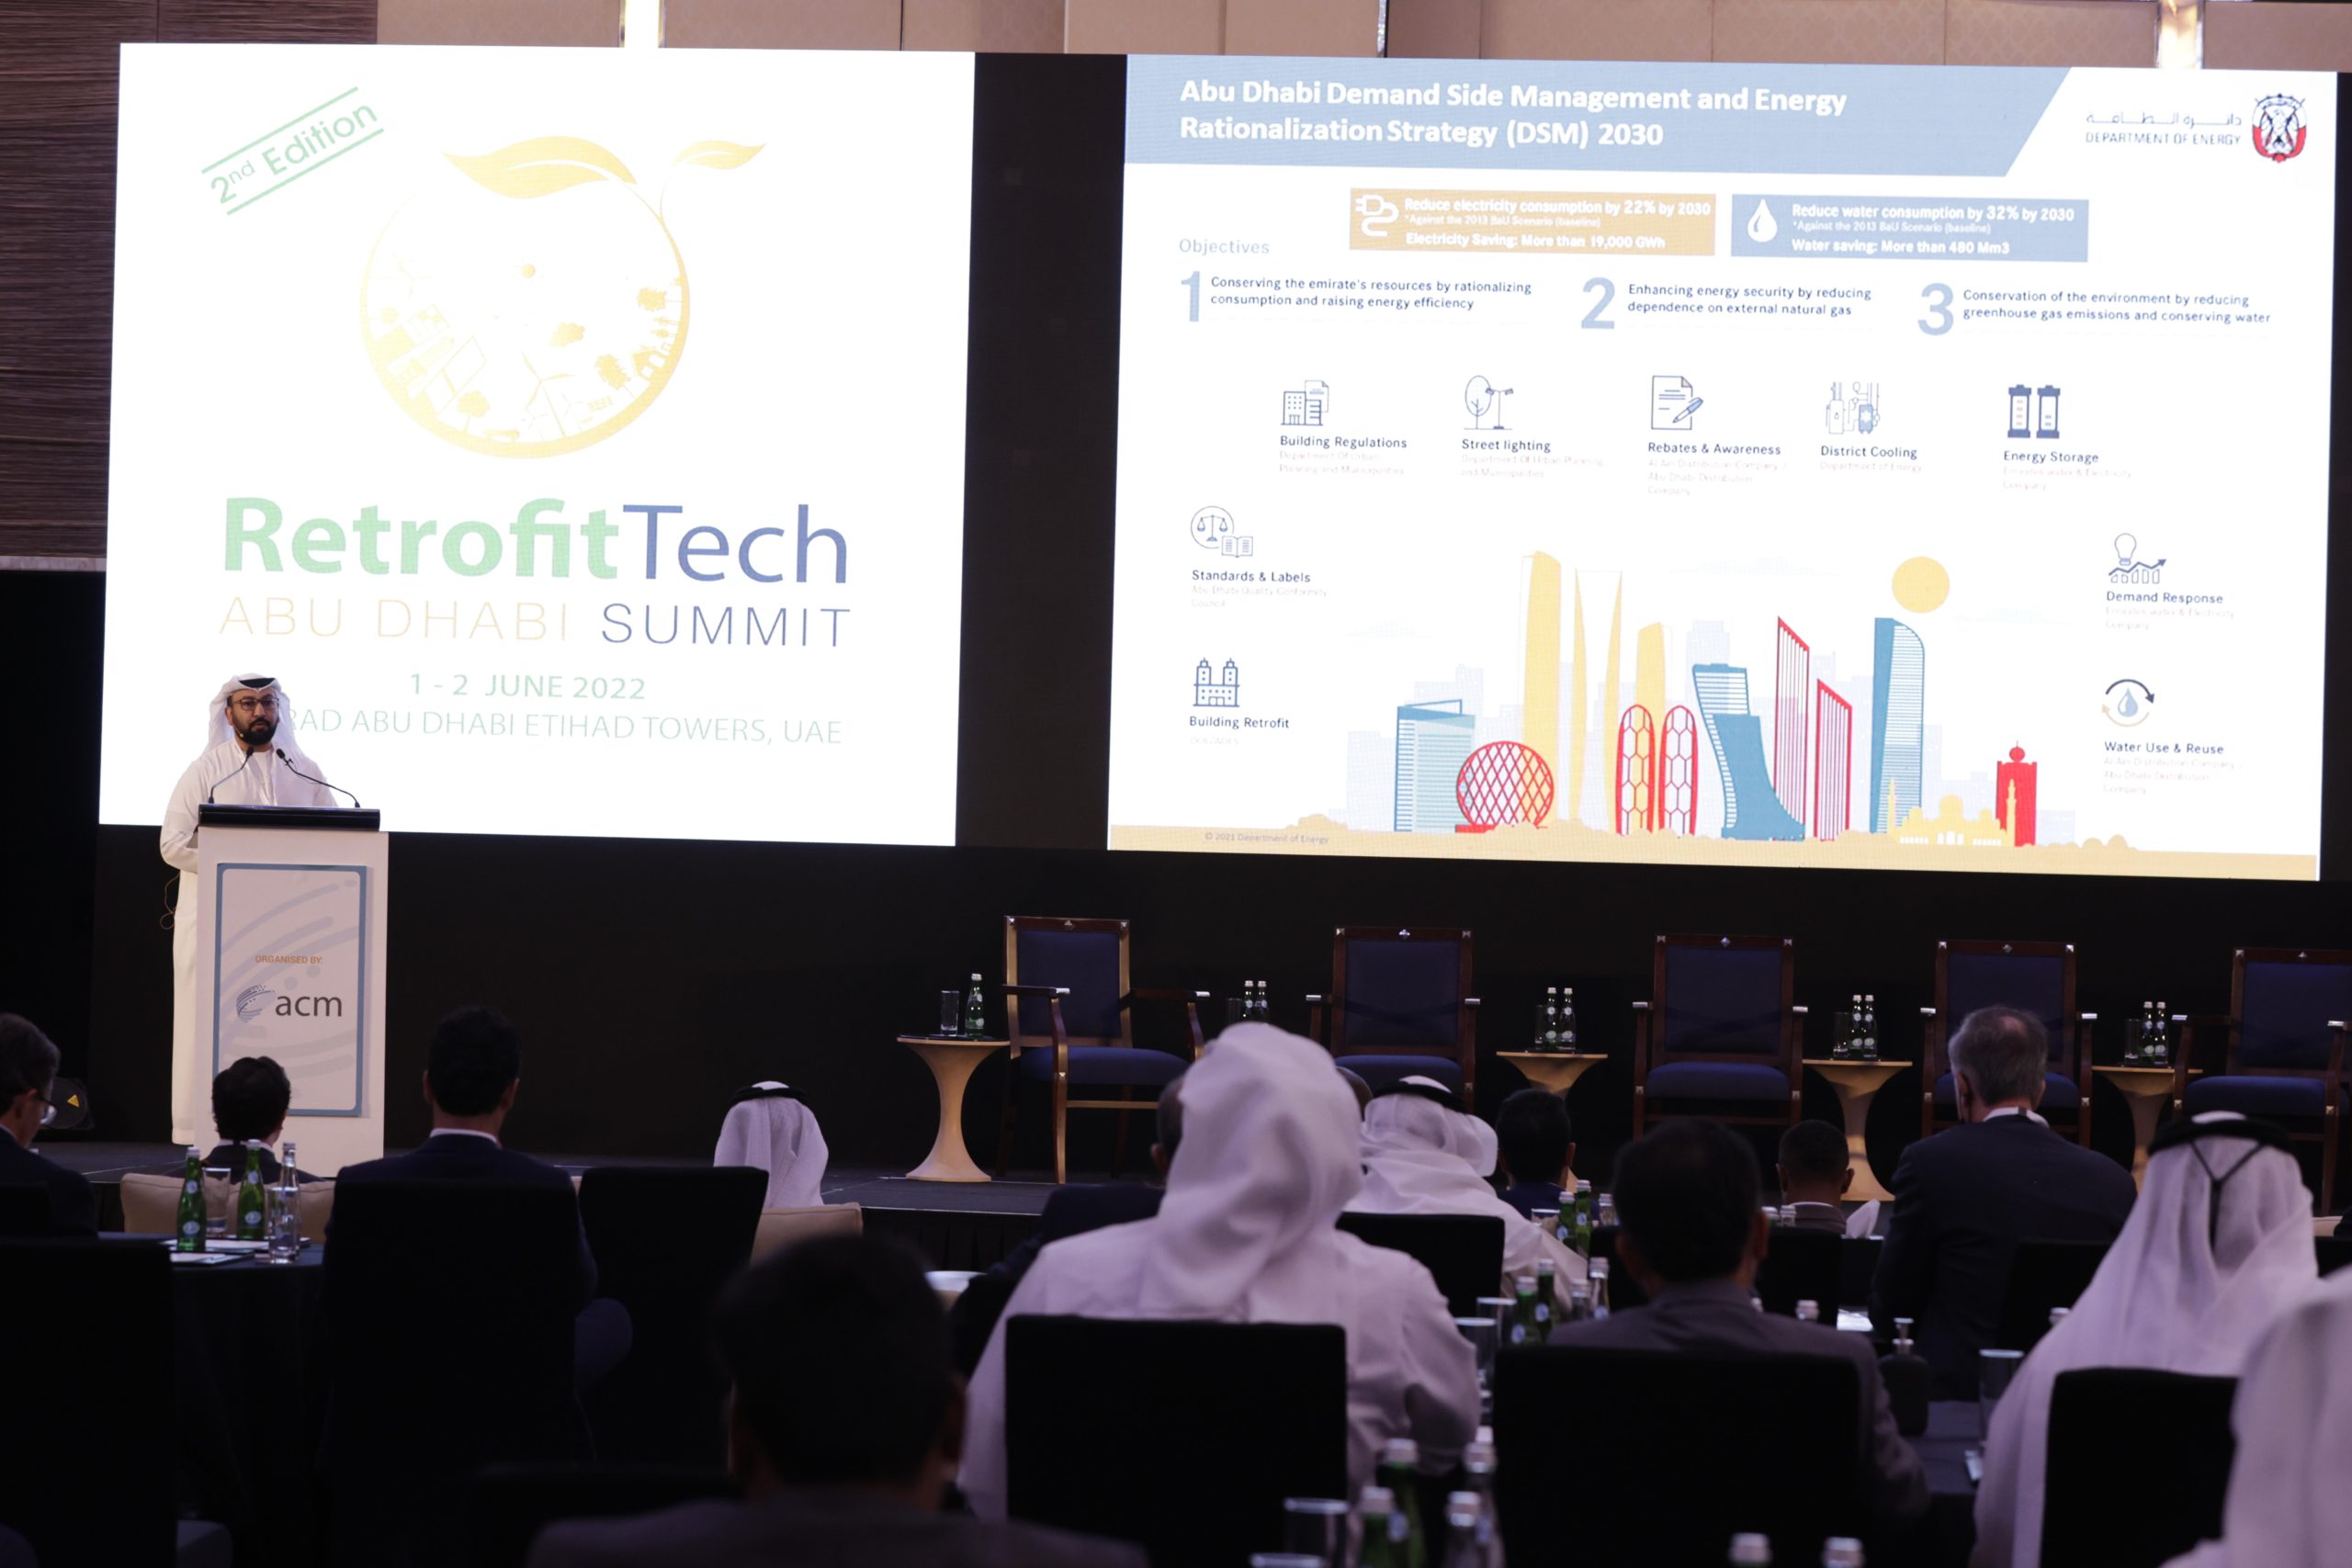 Meeting Abu Dhabi’s sustainability goals in the spotlight, as 2nd Retrofit Tech Abu Dhabi Summit gets under way